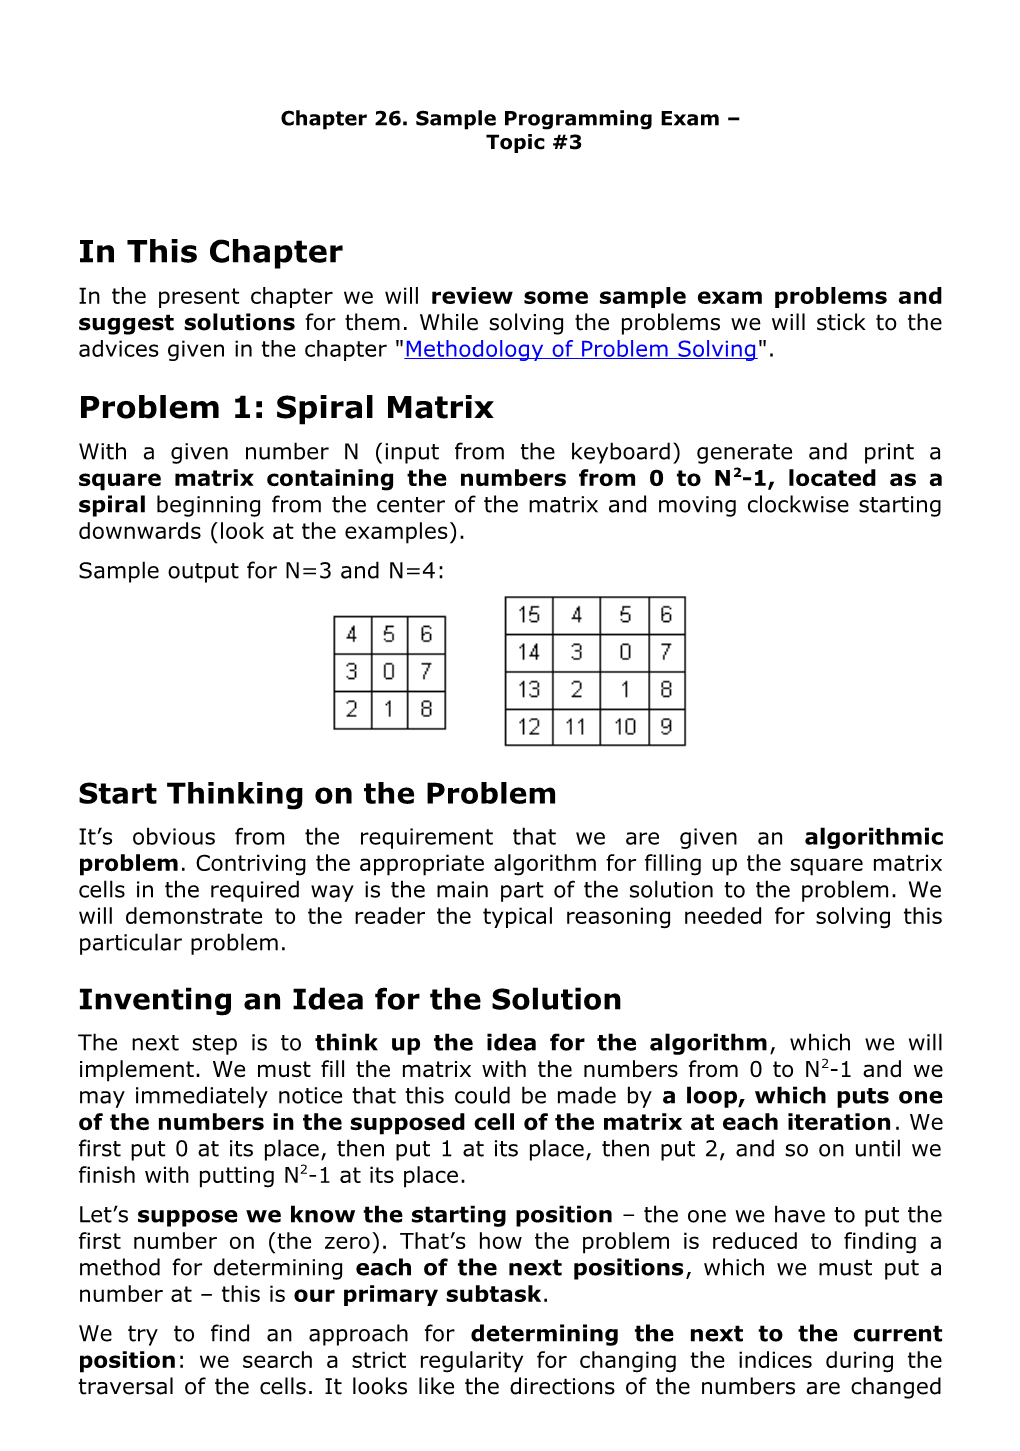 Chapter 26.Sample Programming Exam Topic #3